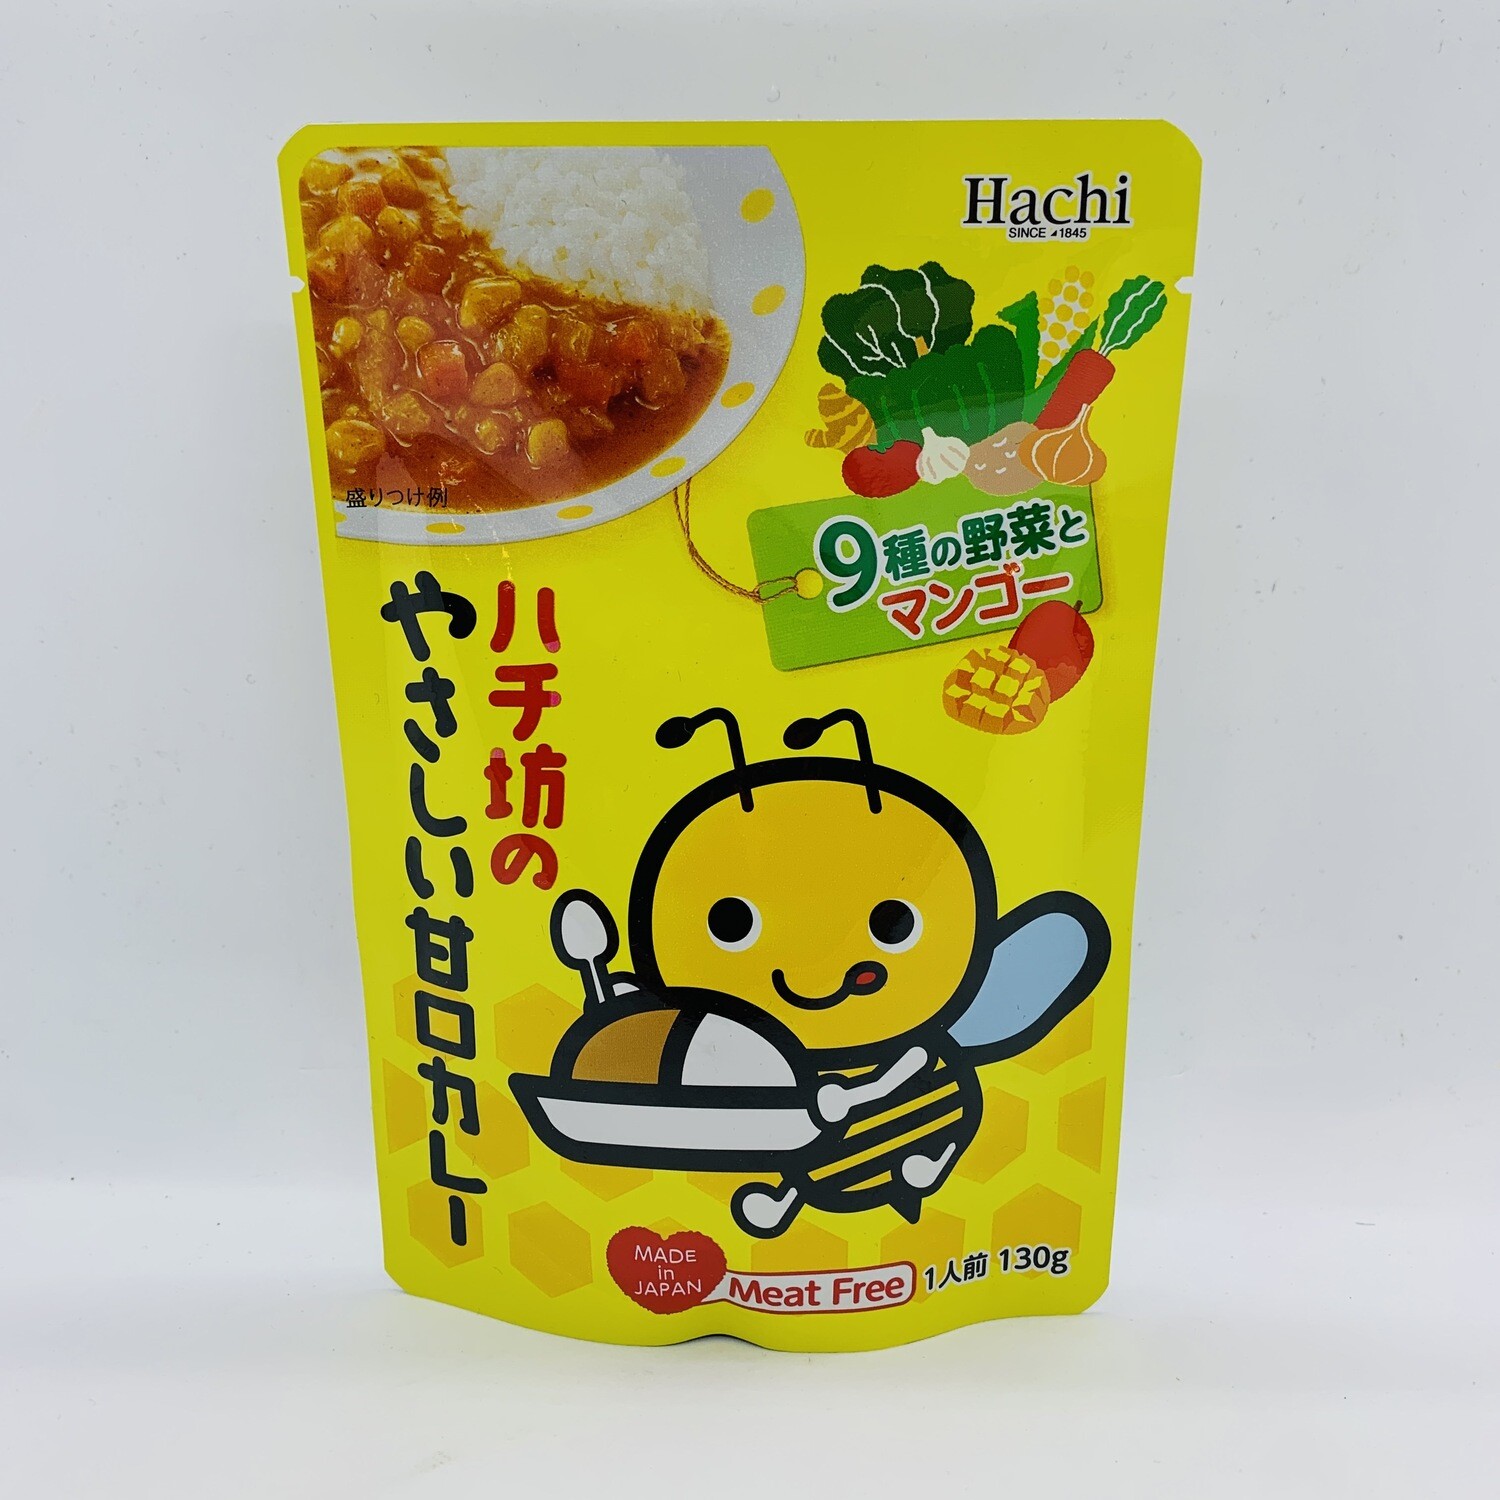 Hachi Hachibo Curry Sauce Kids